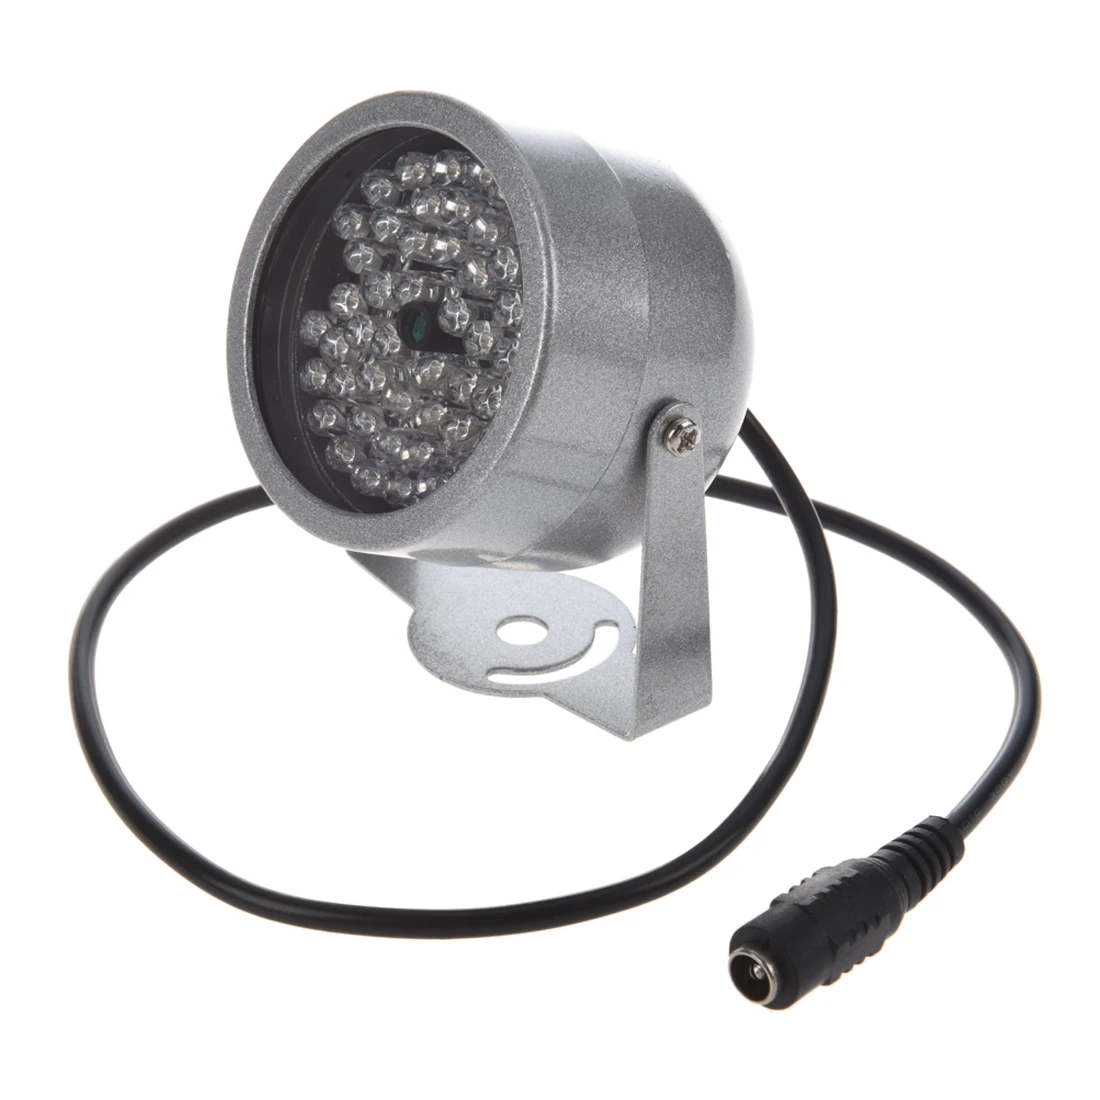 

48 LED Illuminator IR Infrared Night Vision Light Security Lamp For CCTV Camera